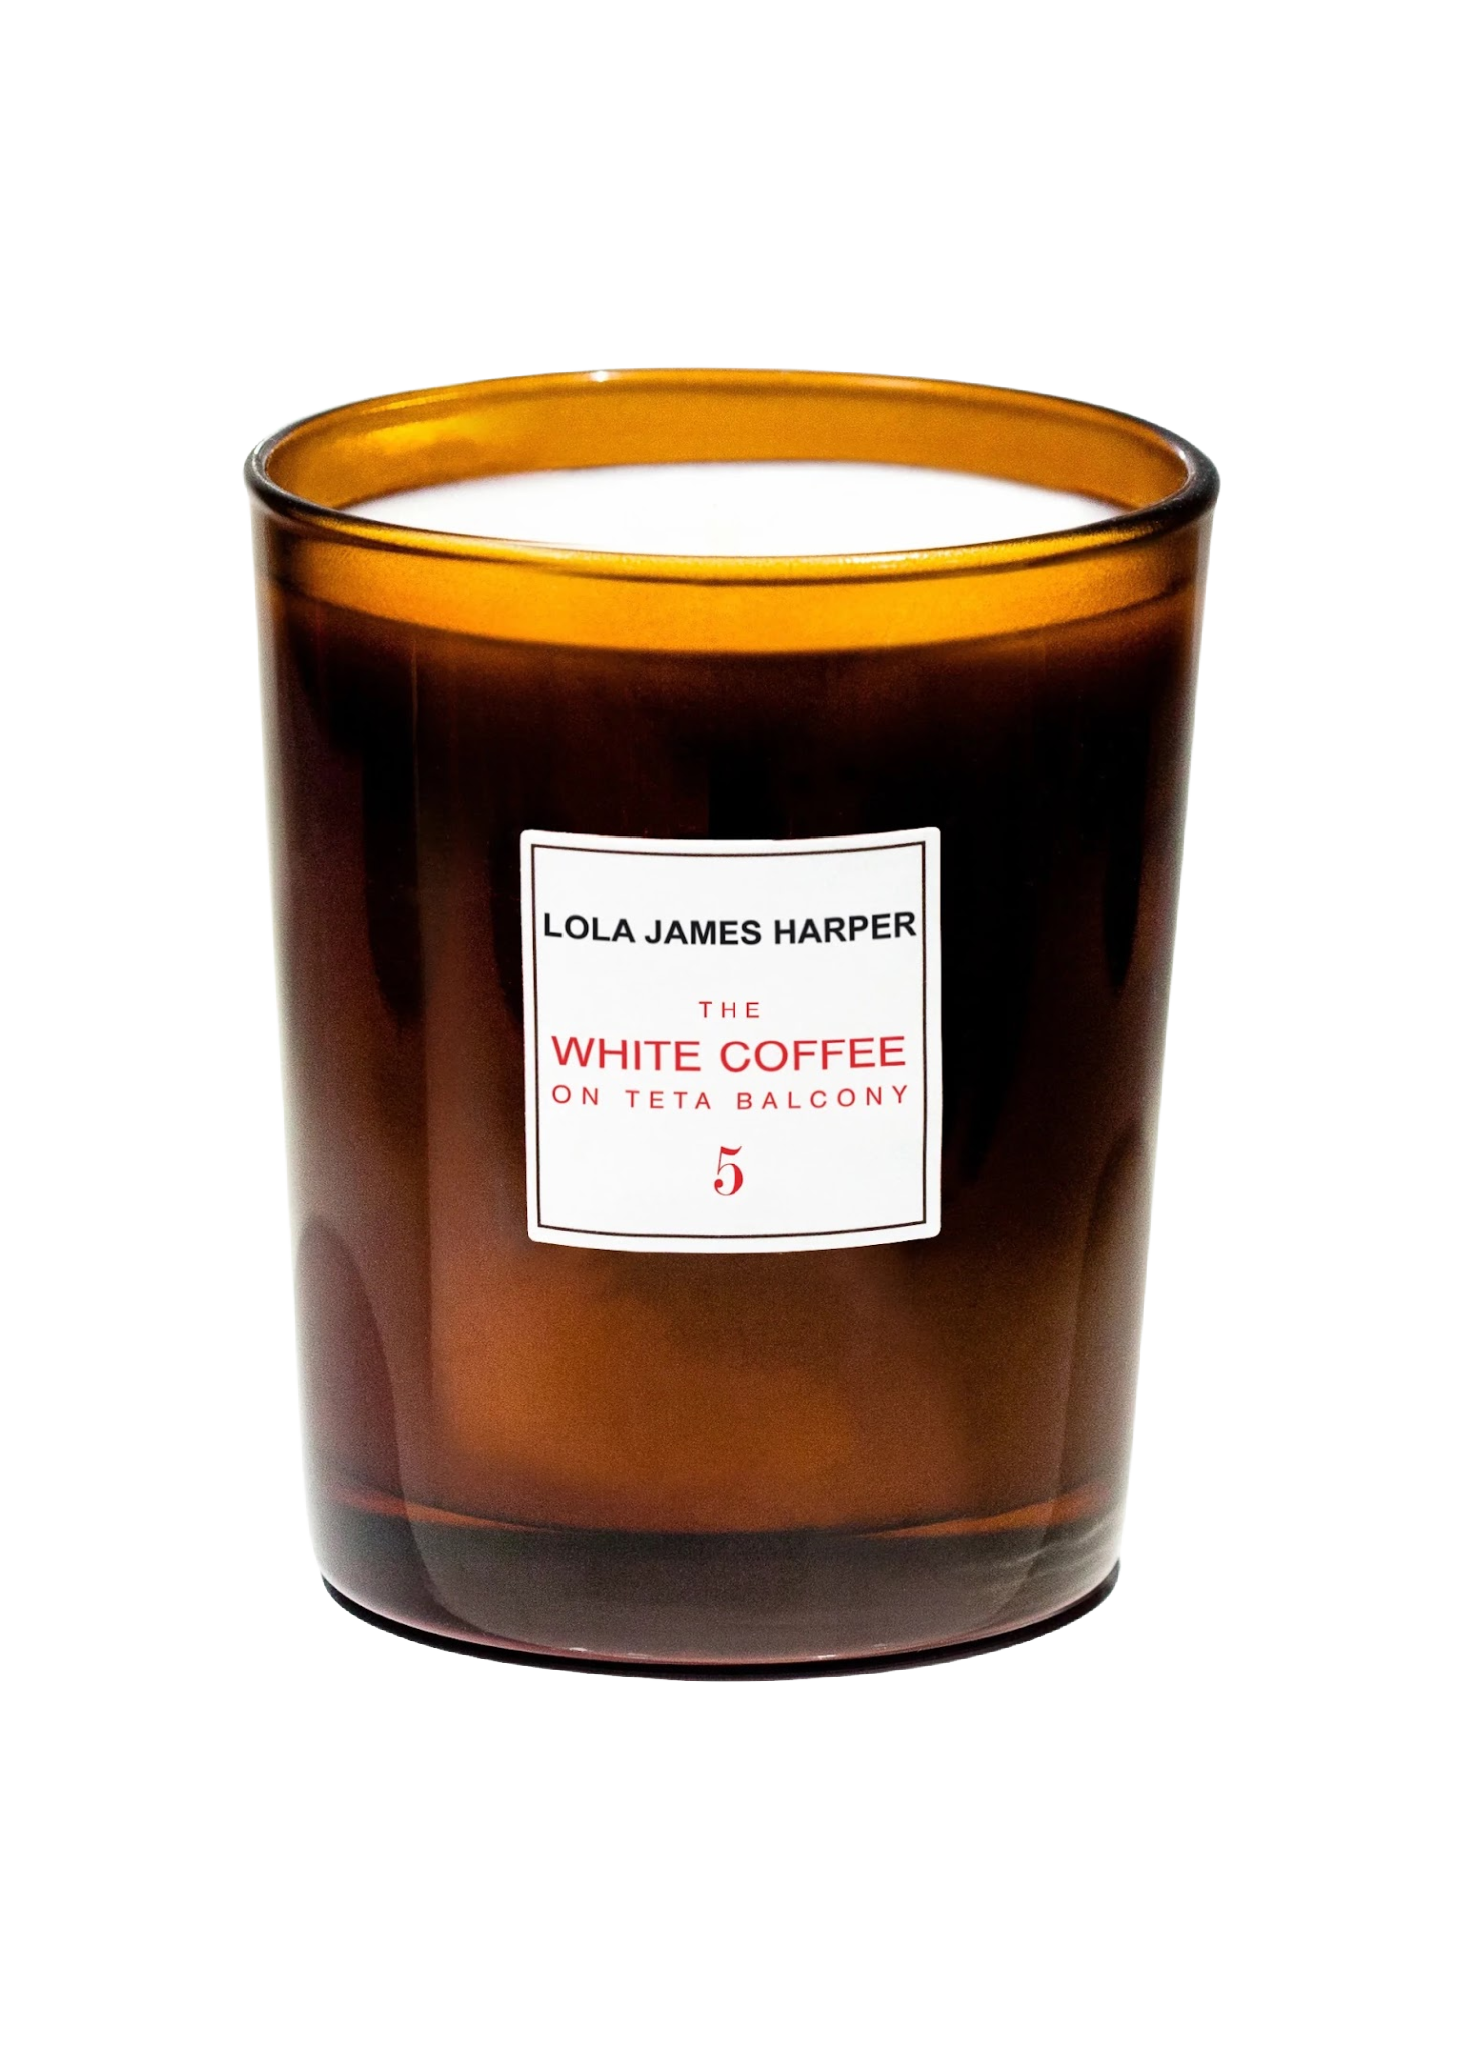 Lola James Harper Candle 5 The White Coffee in Orange Blossom, Cedar, Honey